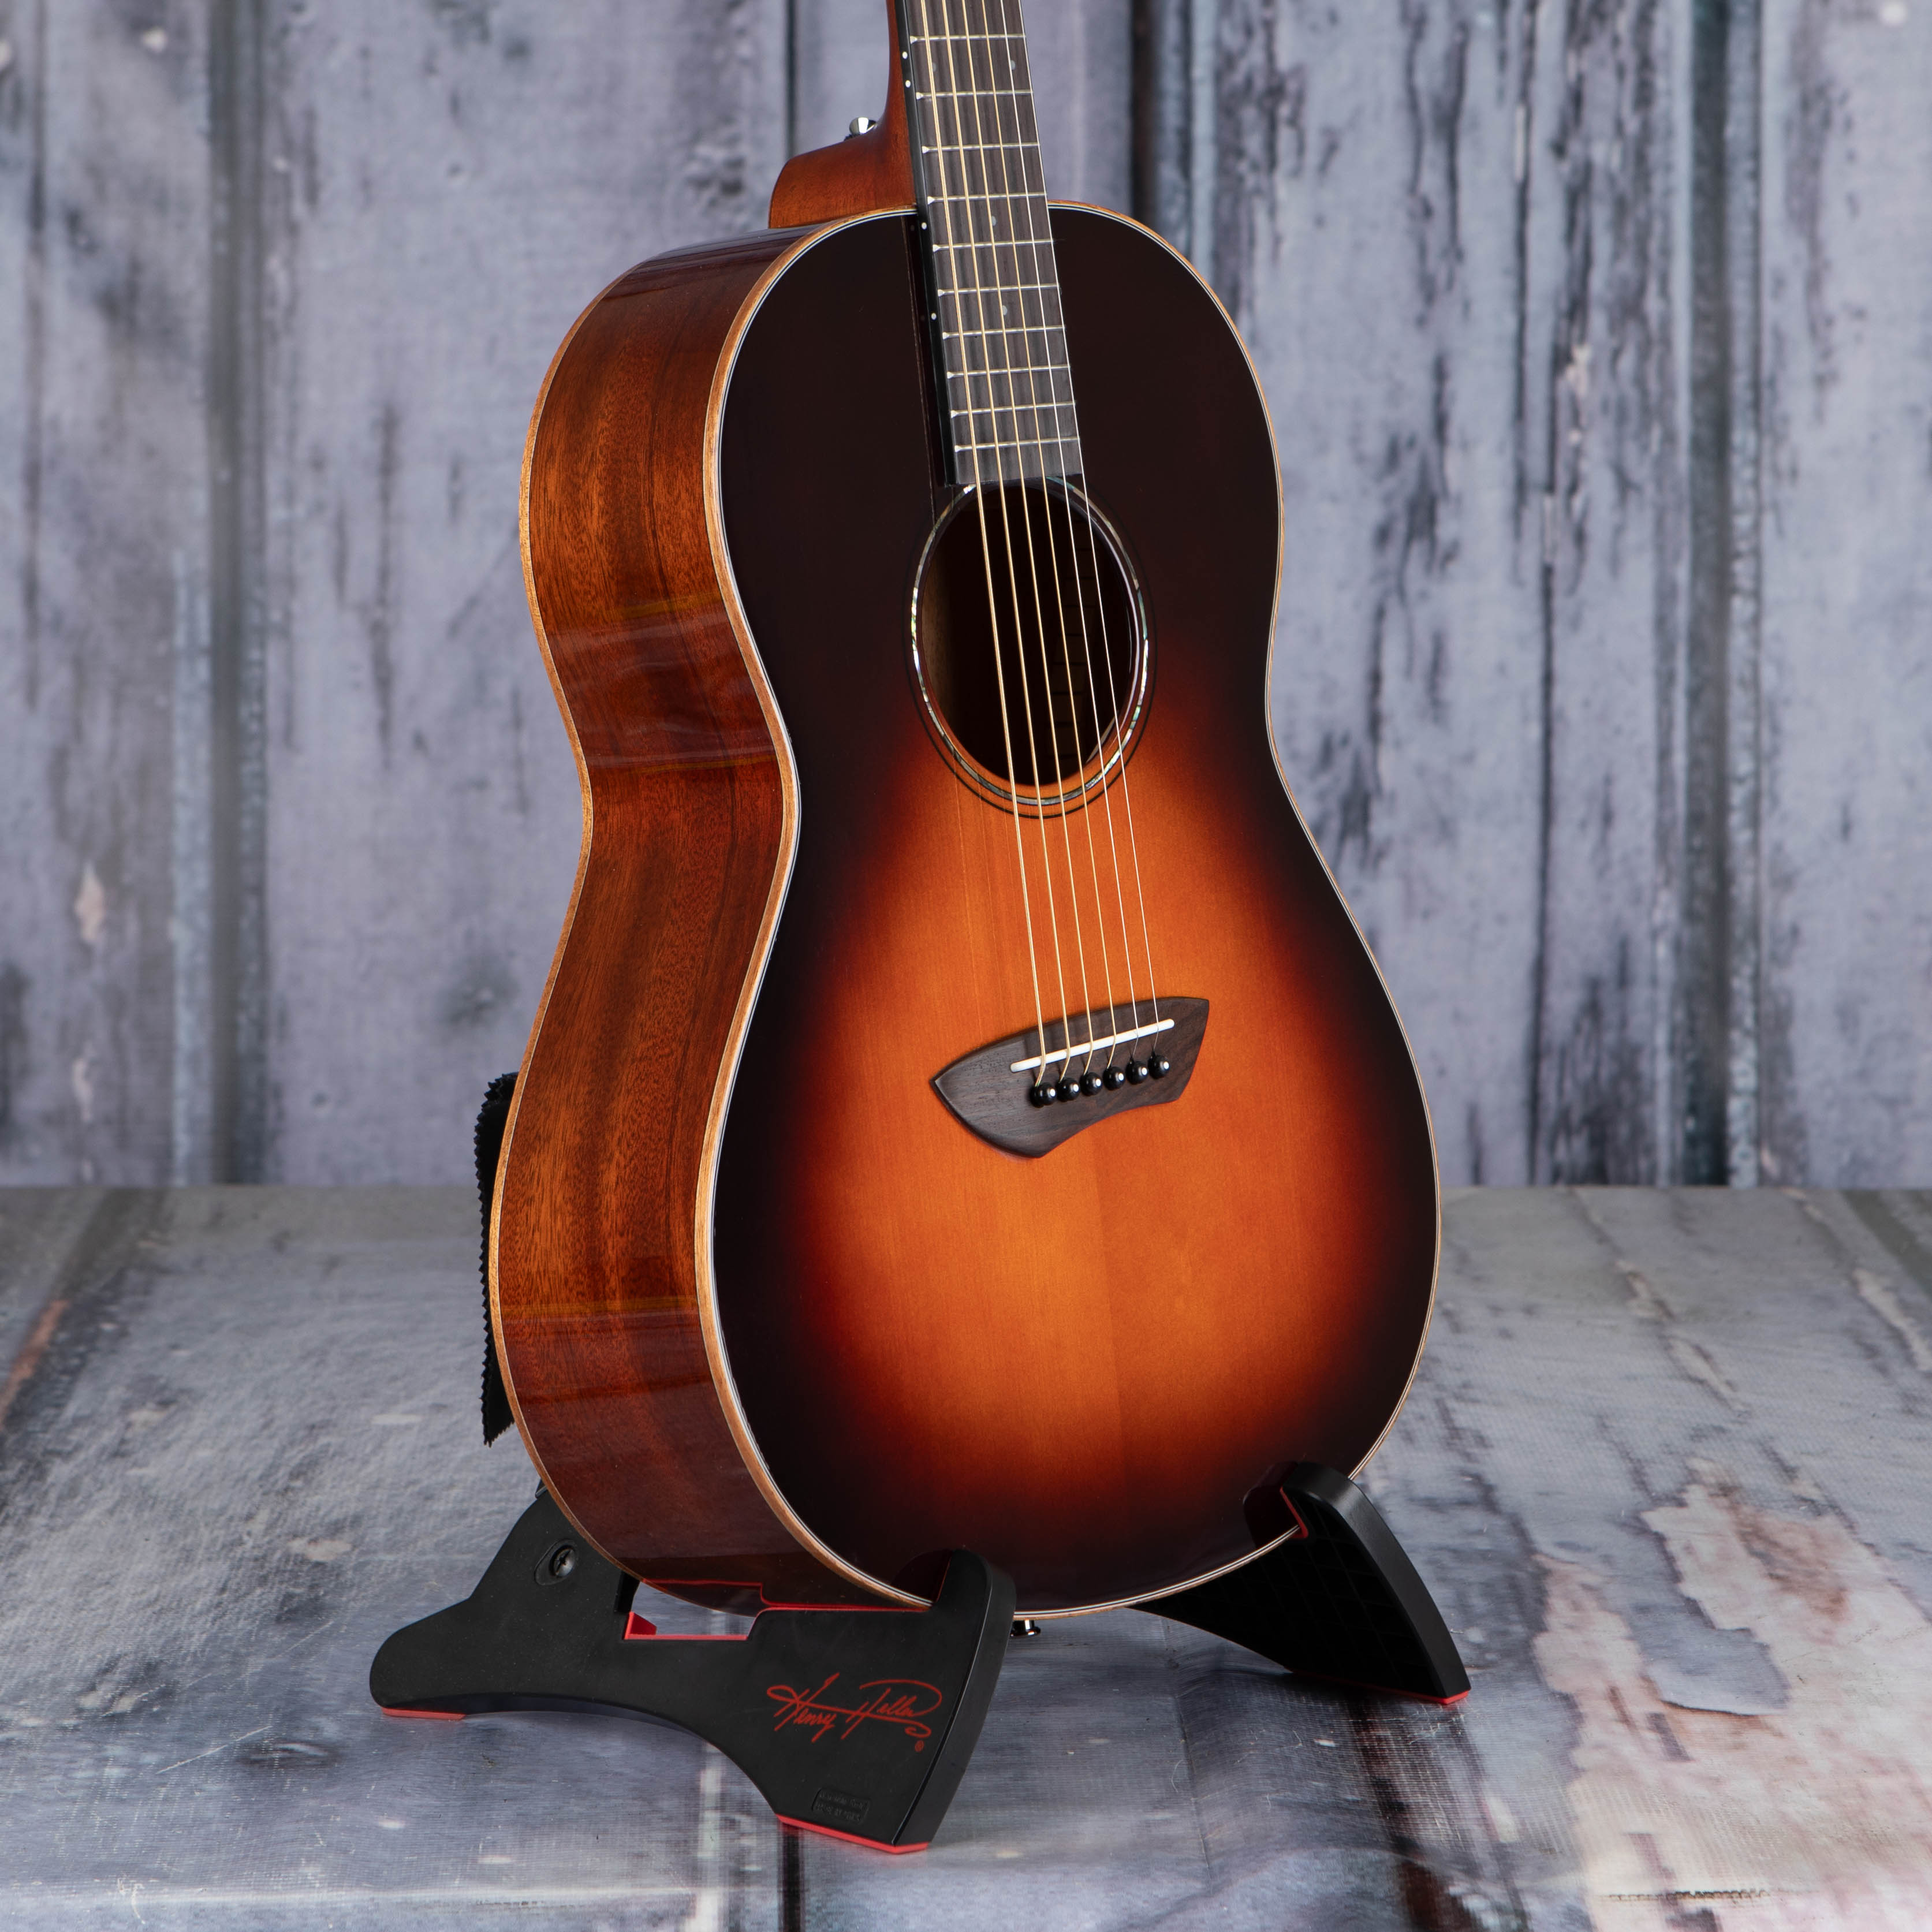 Yamaha CSF3M Compact Folk Acoustic/Electric Guitar, Tobacco Brown Sunburst, angle